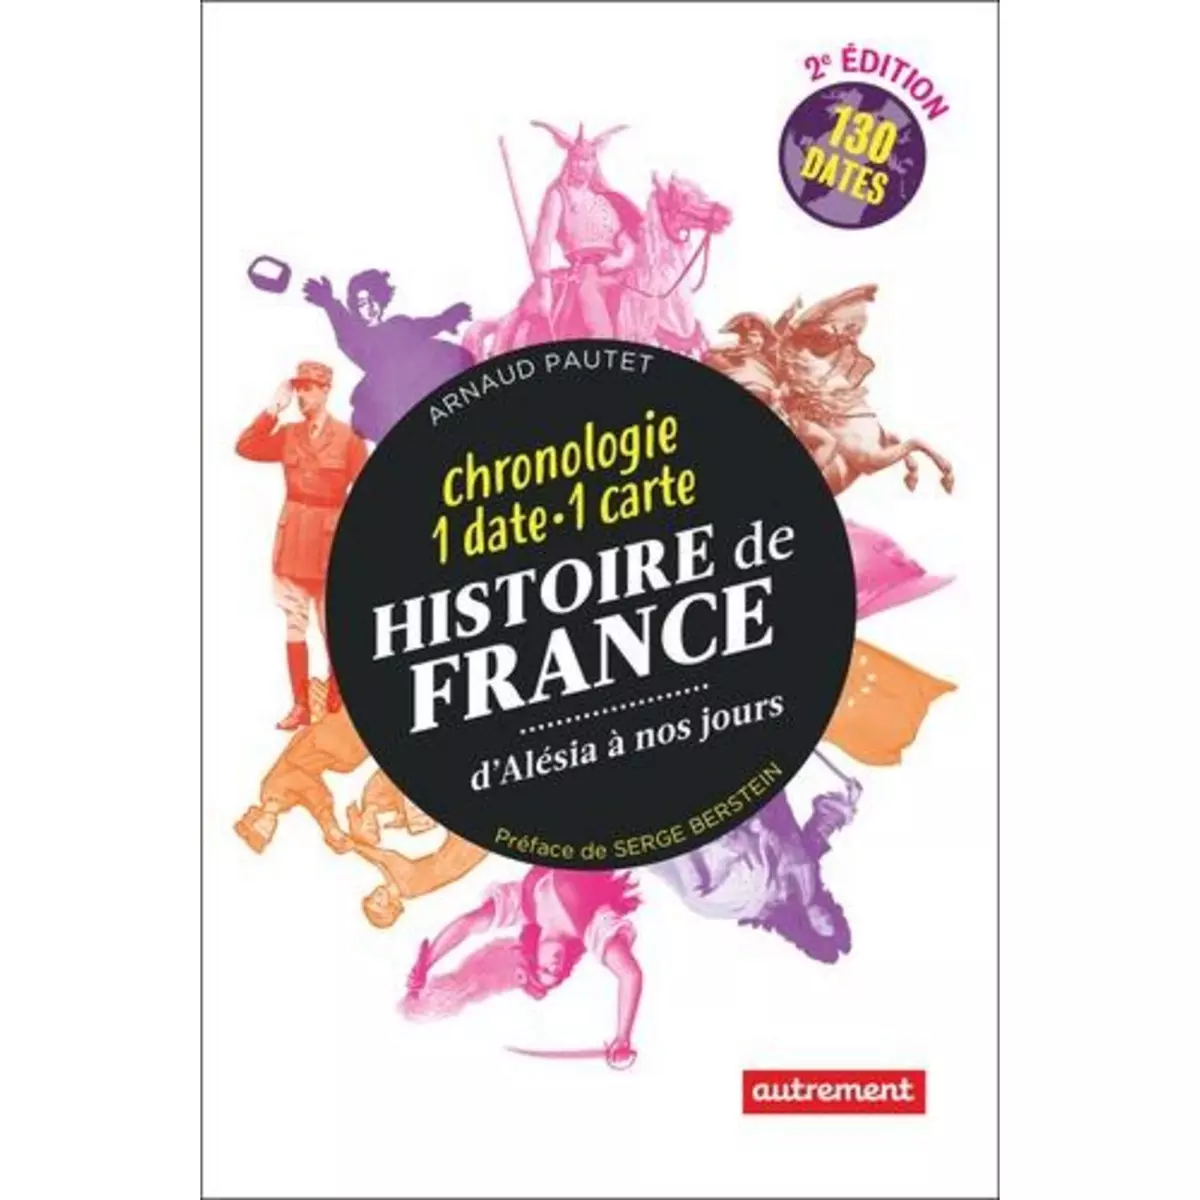  HISTOIRE DE FRANCE. CHRONOLOGIE 1 DATE - 1 CARTE, 2E EDITION, Pautet Arnaud